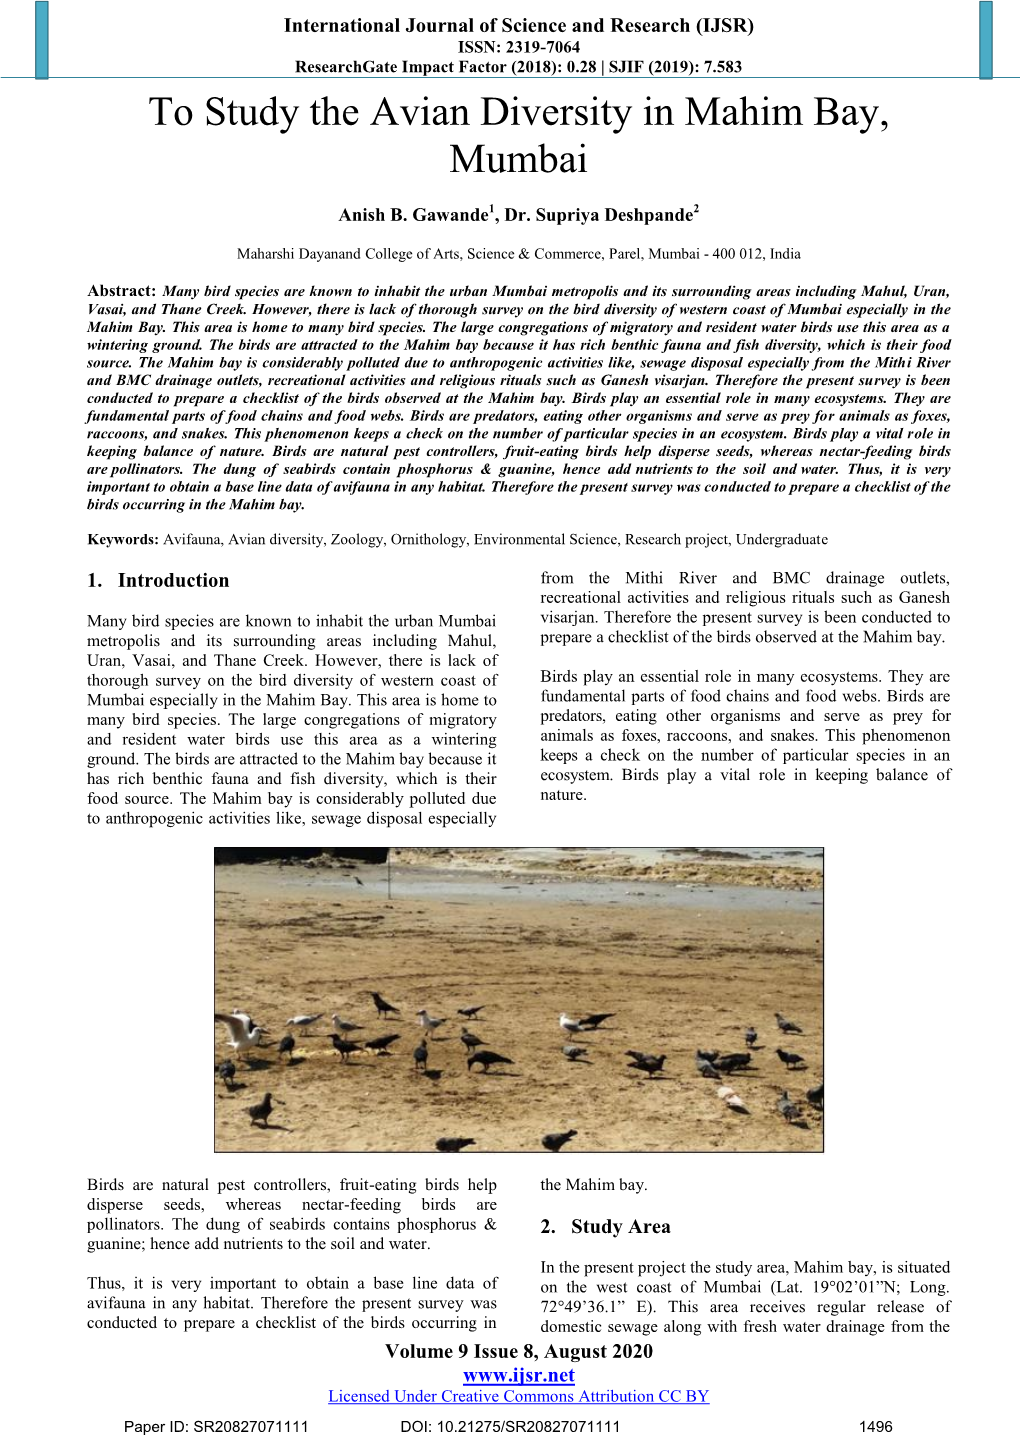 To Study the Avian Diversity in Mahim Bay, Mumbai